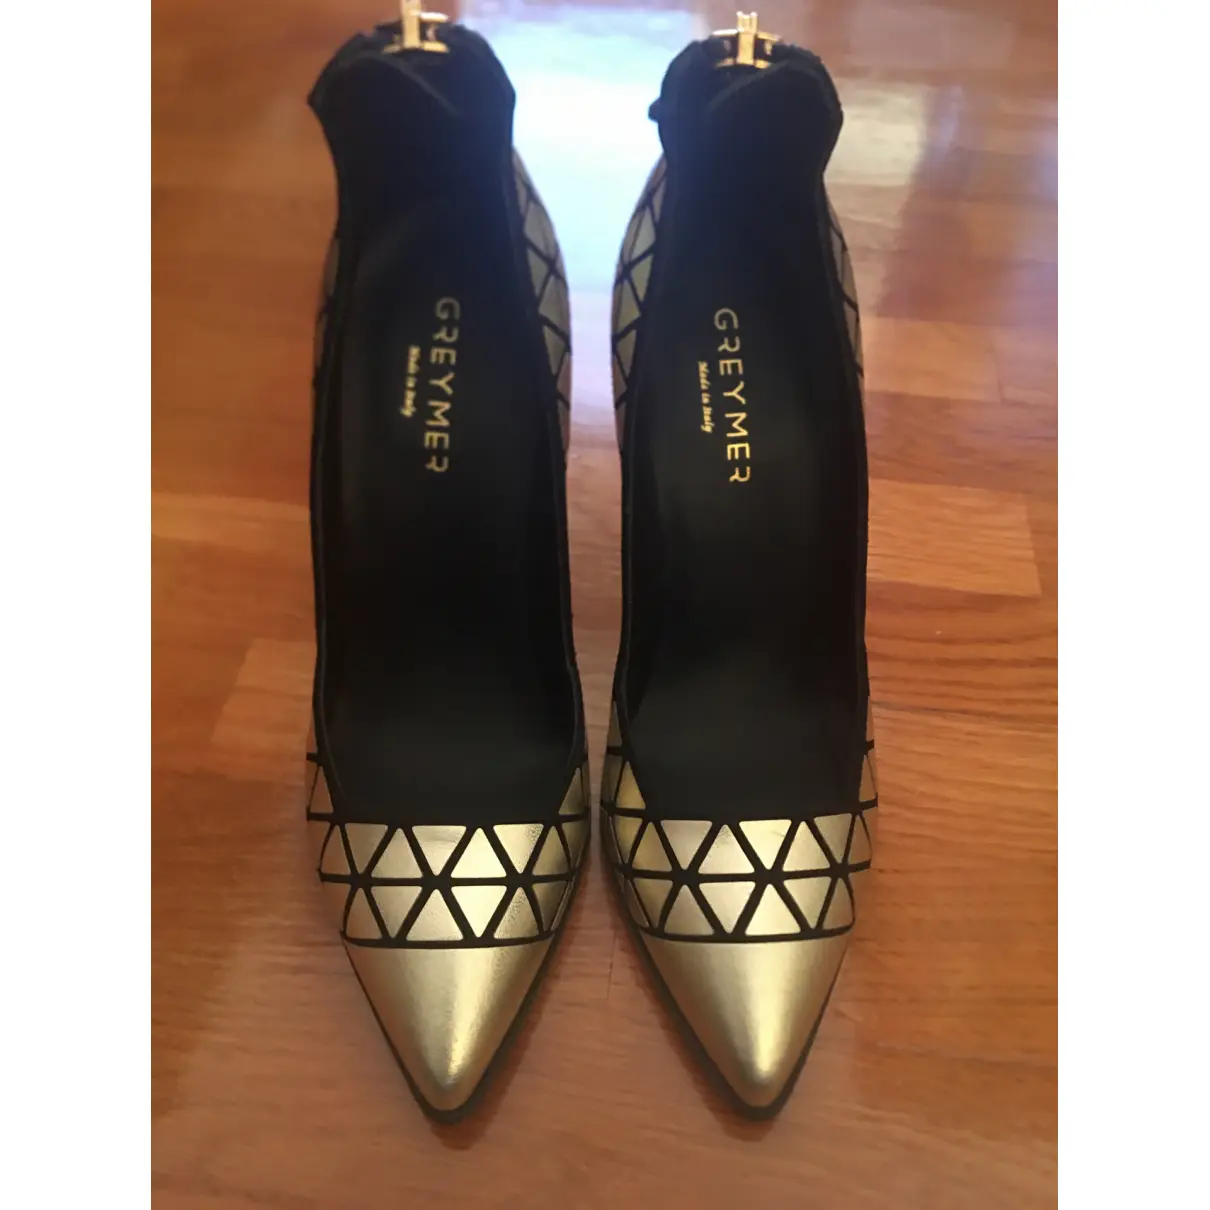 Buy Greymer Leather heels online